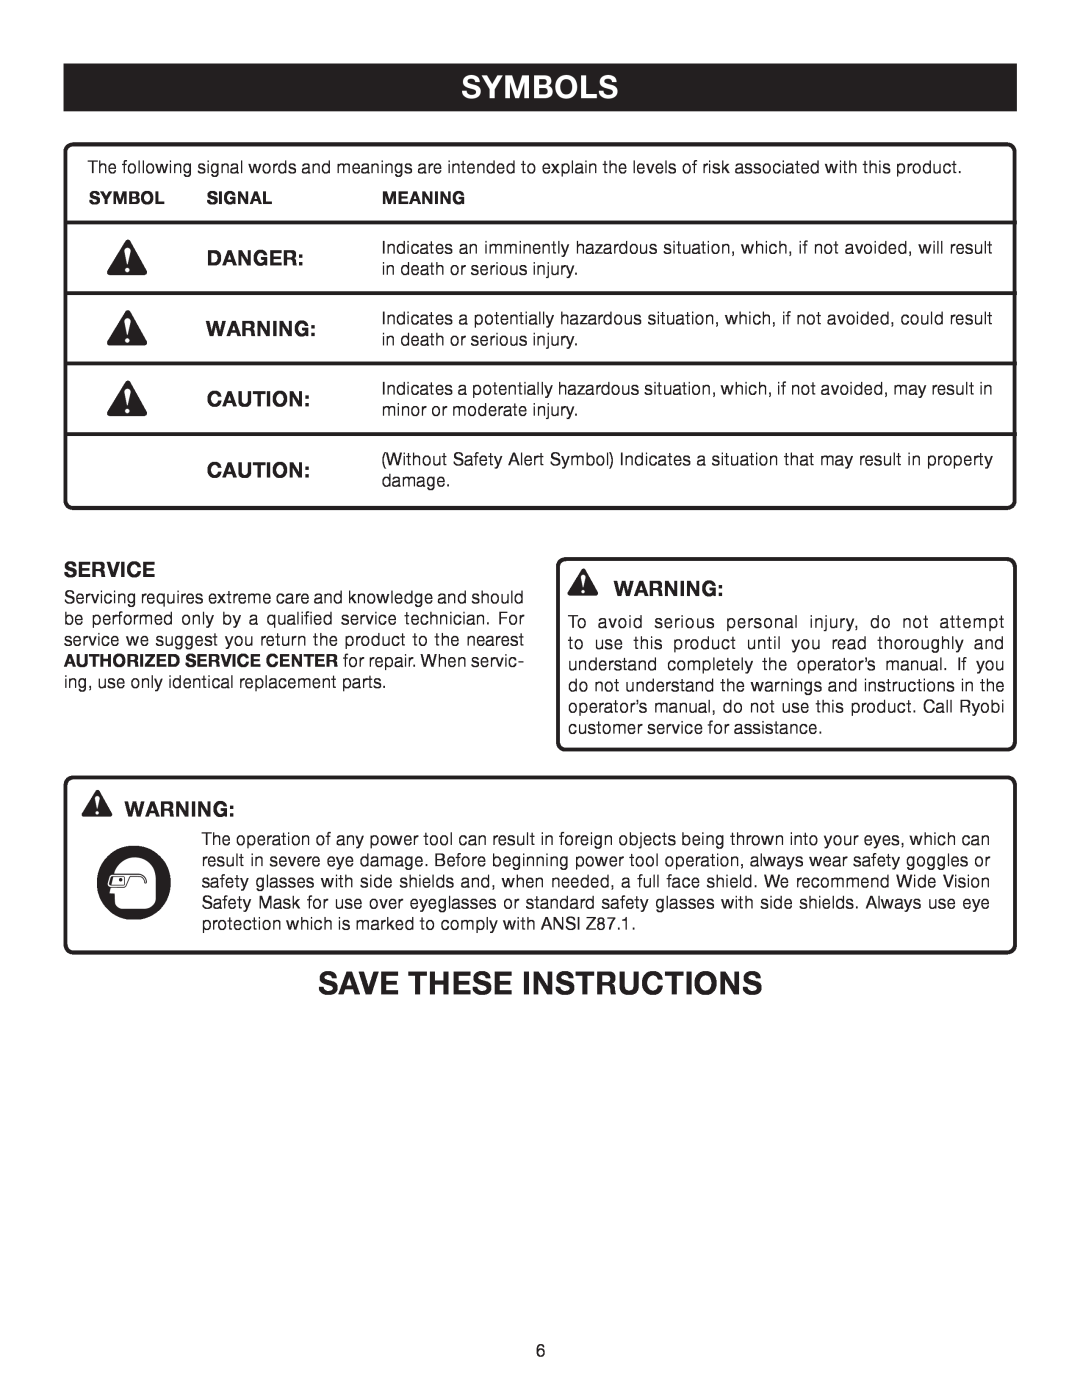 Ryobi P600 manual Save These Instructions, Danger, Symbols, Service 